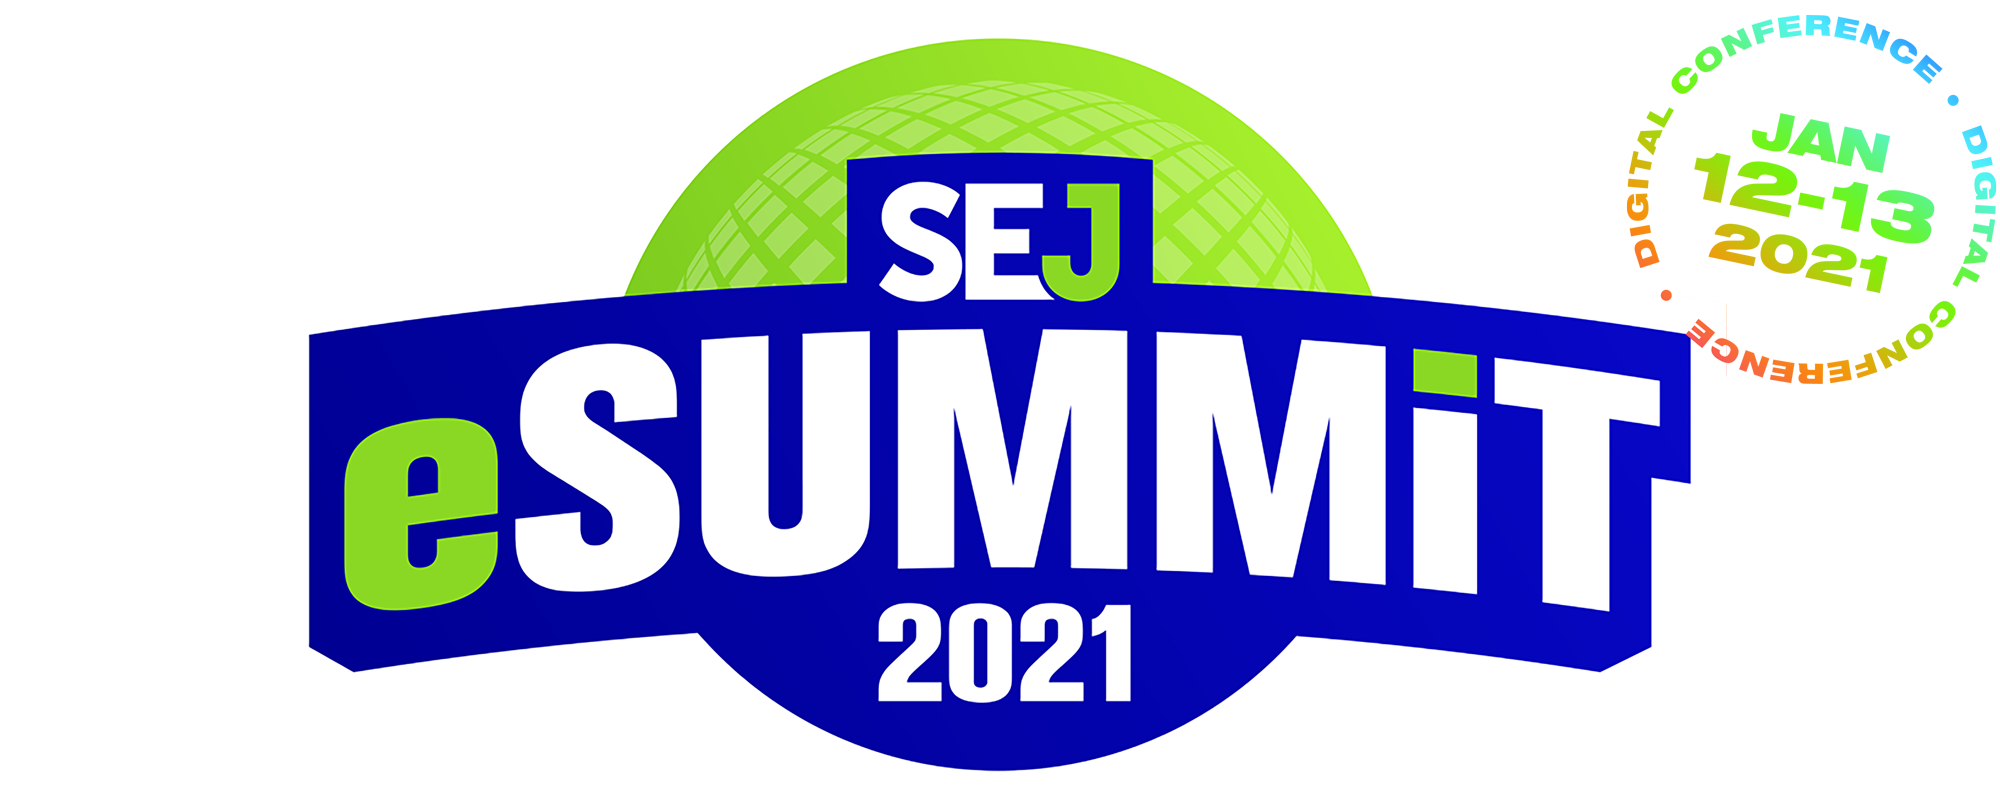 SEJ eSummit: Virtual Conference